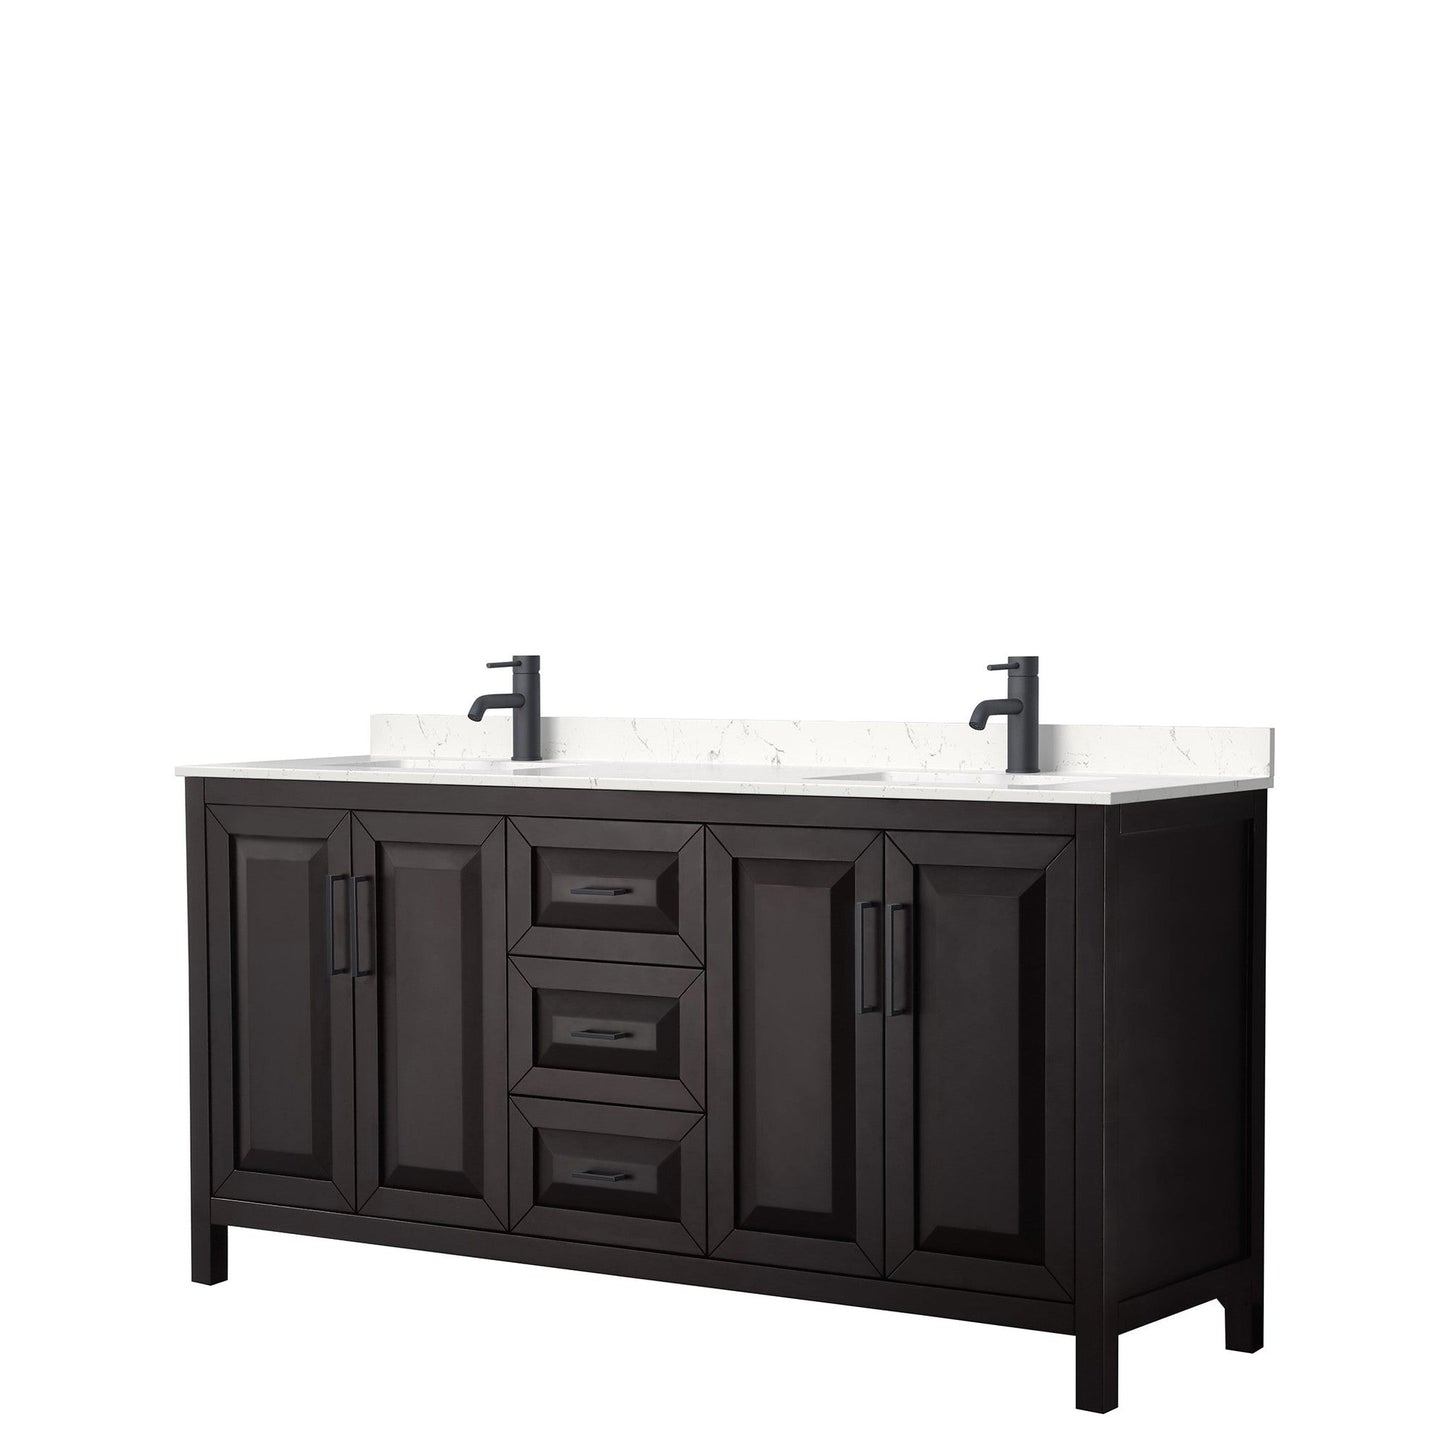 Daria 72" Double Bathroom Vanity in Dark Espresso, Carrara Cultured Marble Countertop, Undermount Square Sinks, Matte Black Trim